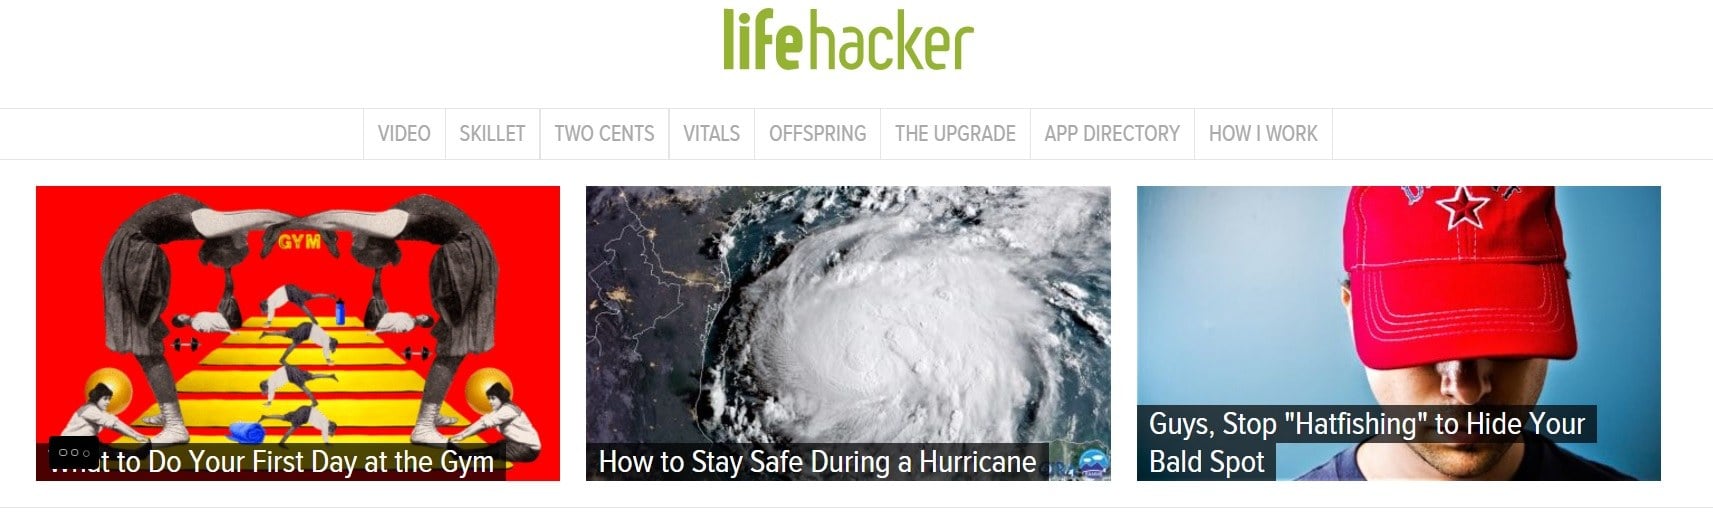 Lifehacker homepage